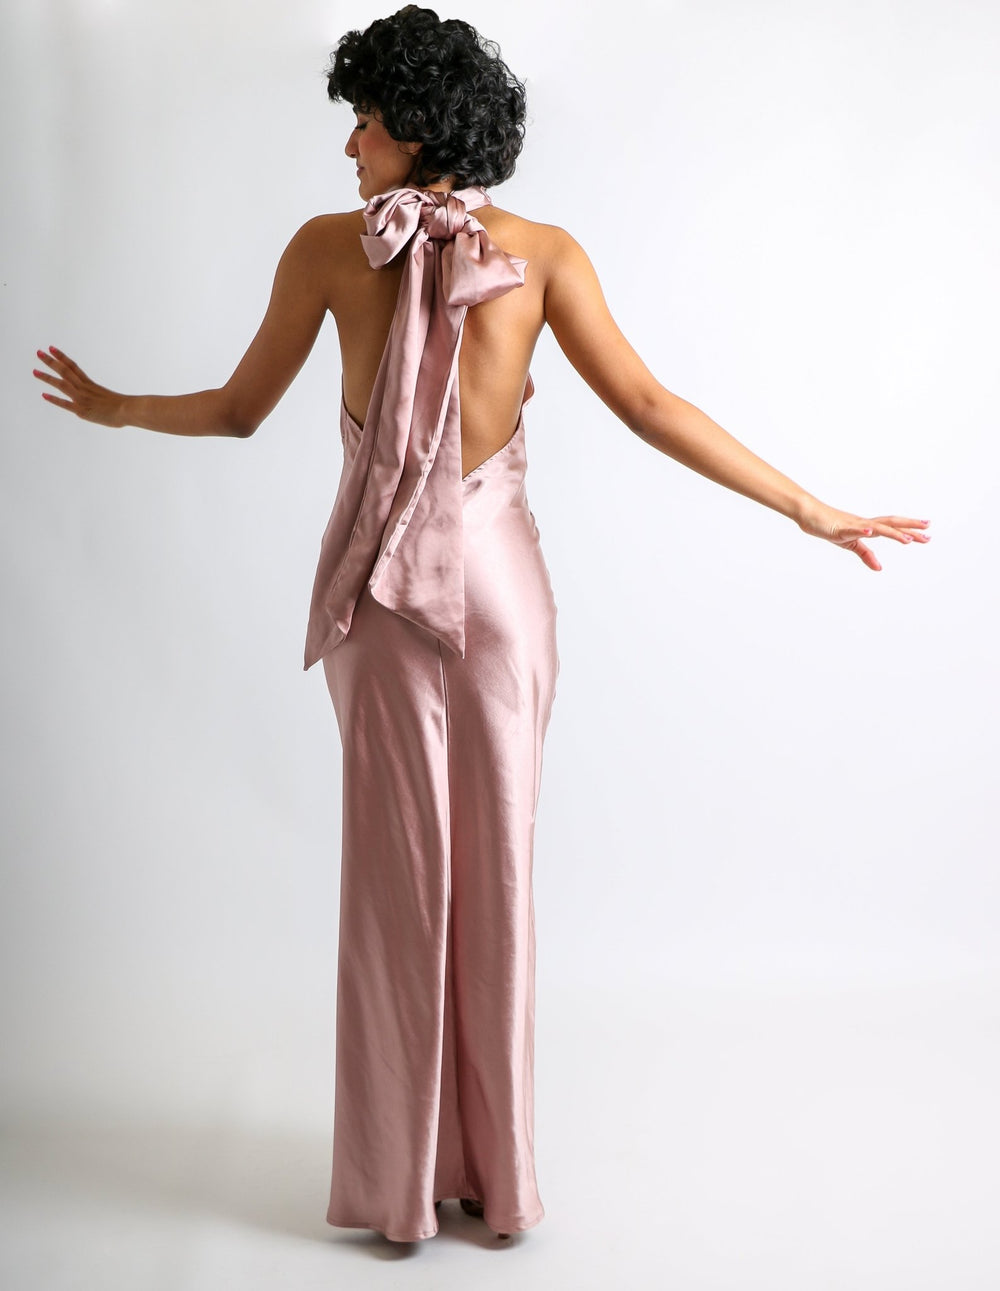 Mariela - rosa palo - Lend the Trend renta de vestidos mexico